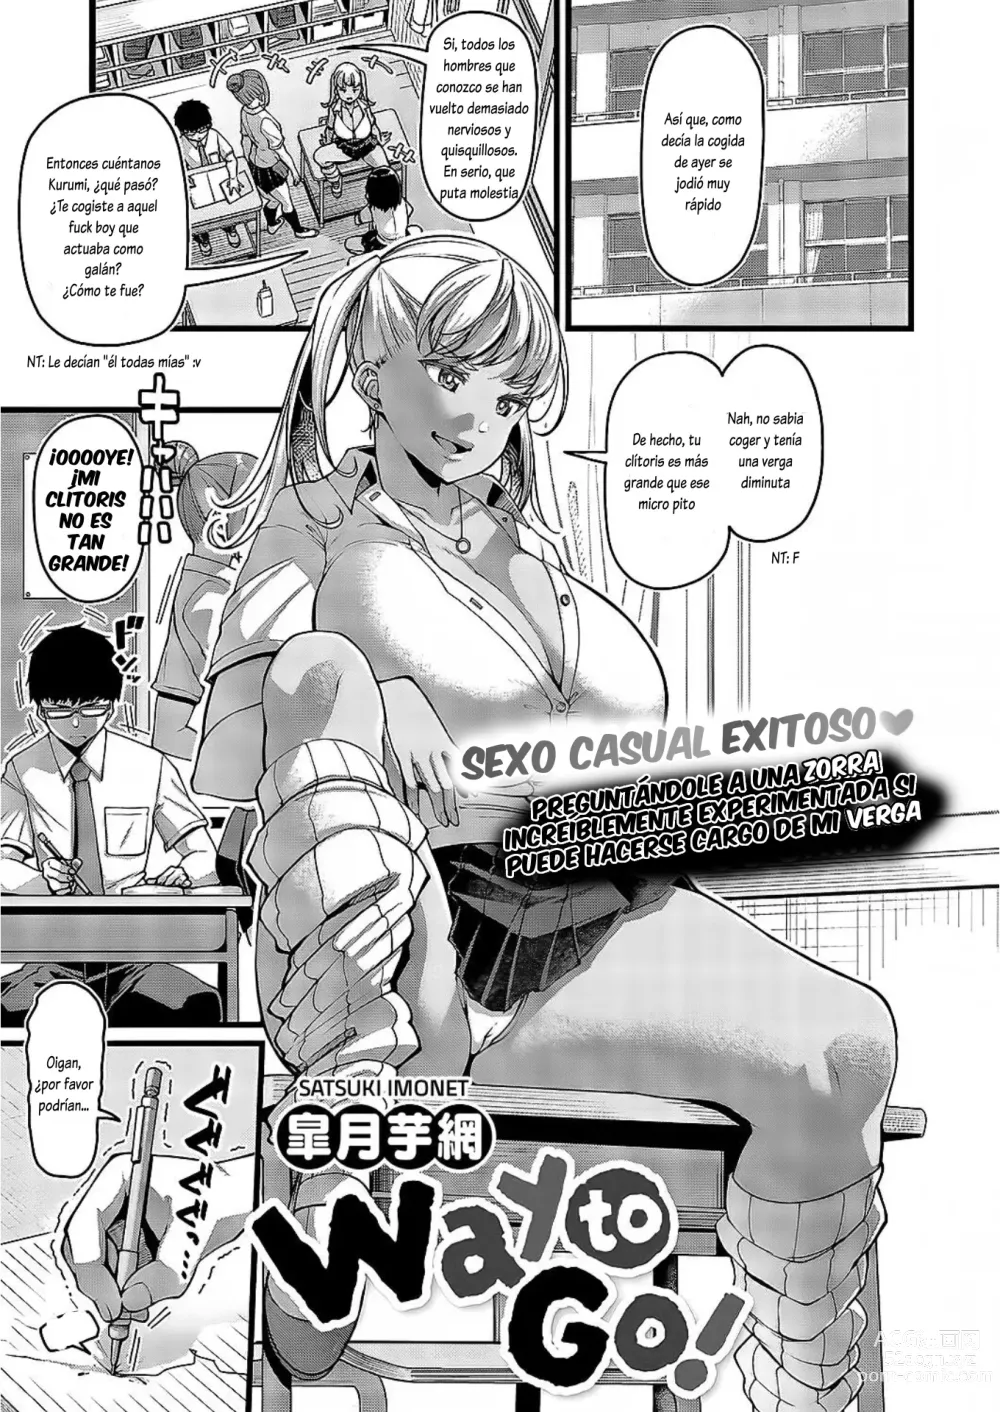 Page 1 of manga Way to Go!